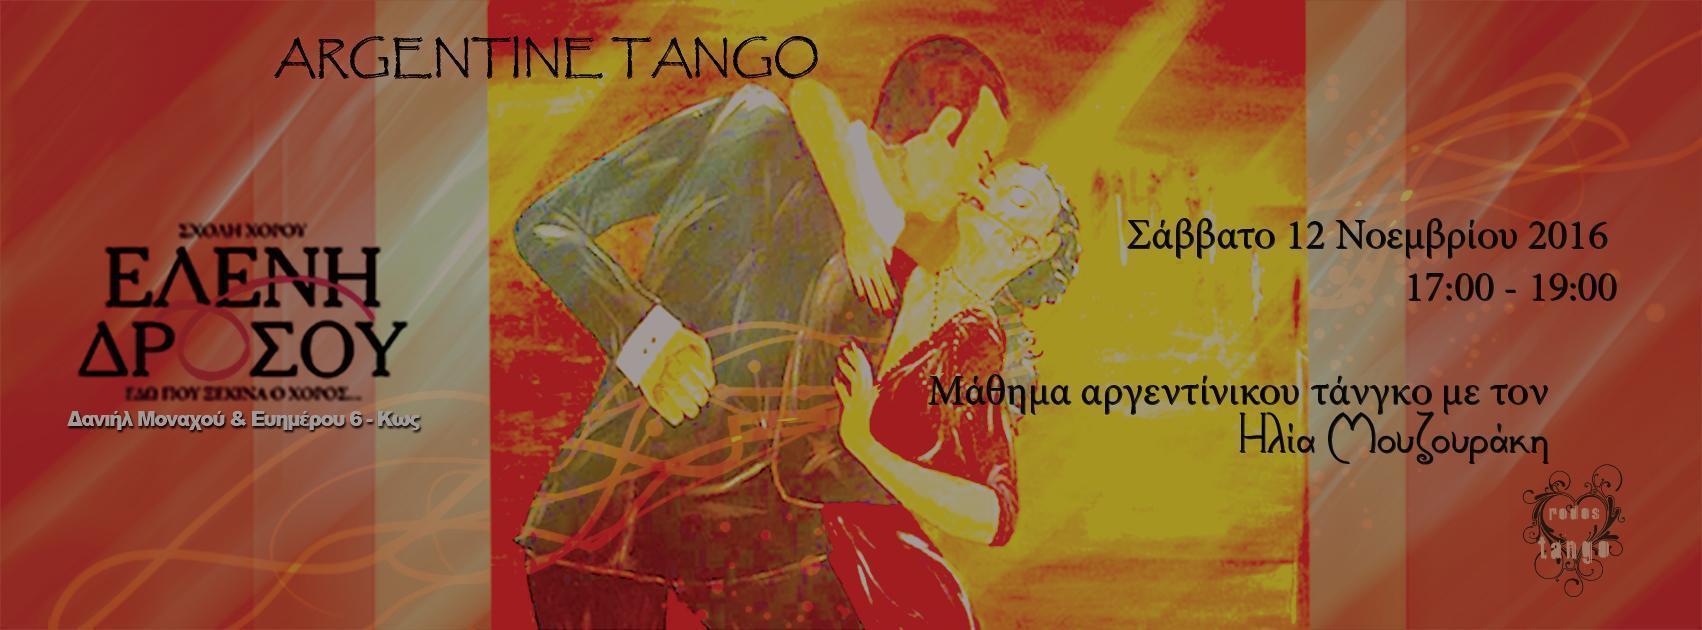 Mάθημα αργεντίνικου τάνγκο στη Σχολή Χορού Ελένη Δρόσου - Κως - 12.11.2016